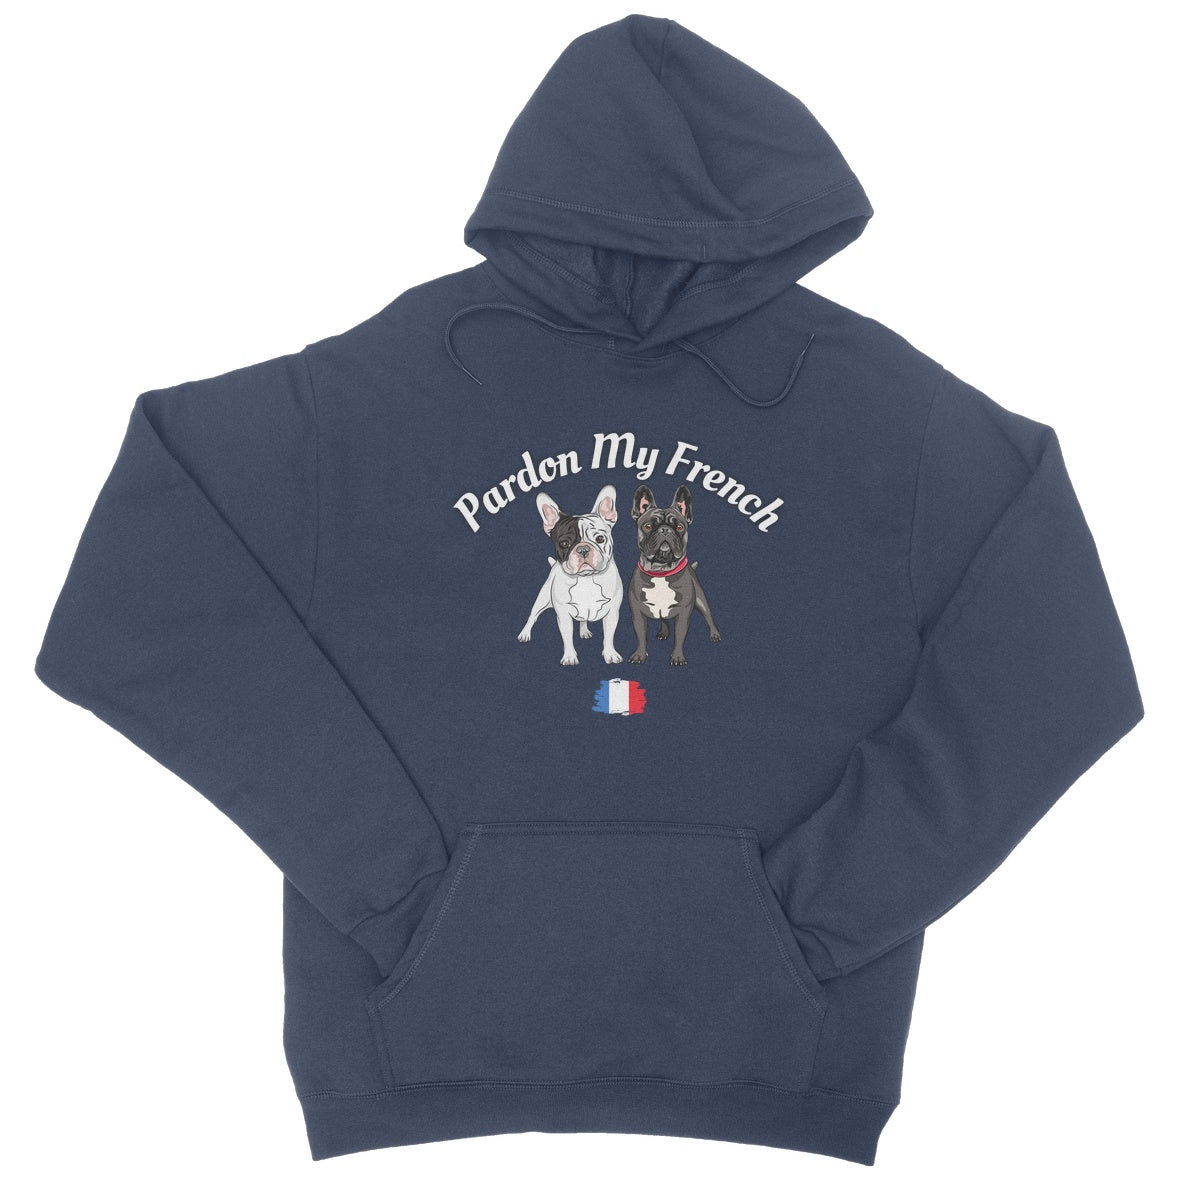 pardon my french hoodie navy